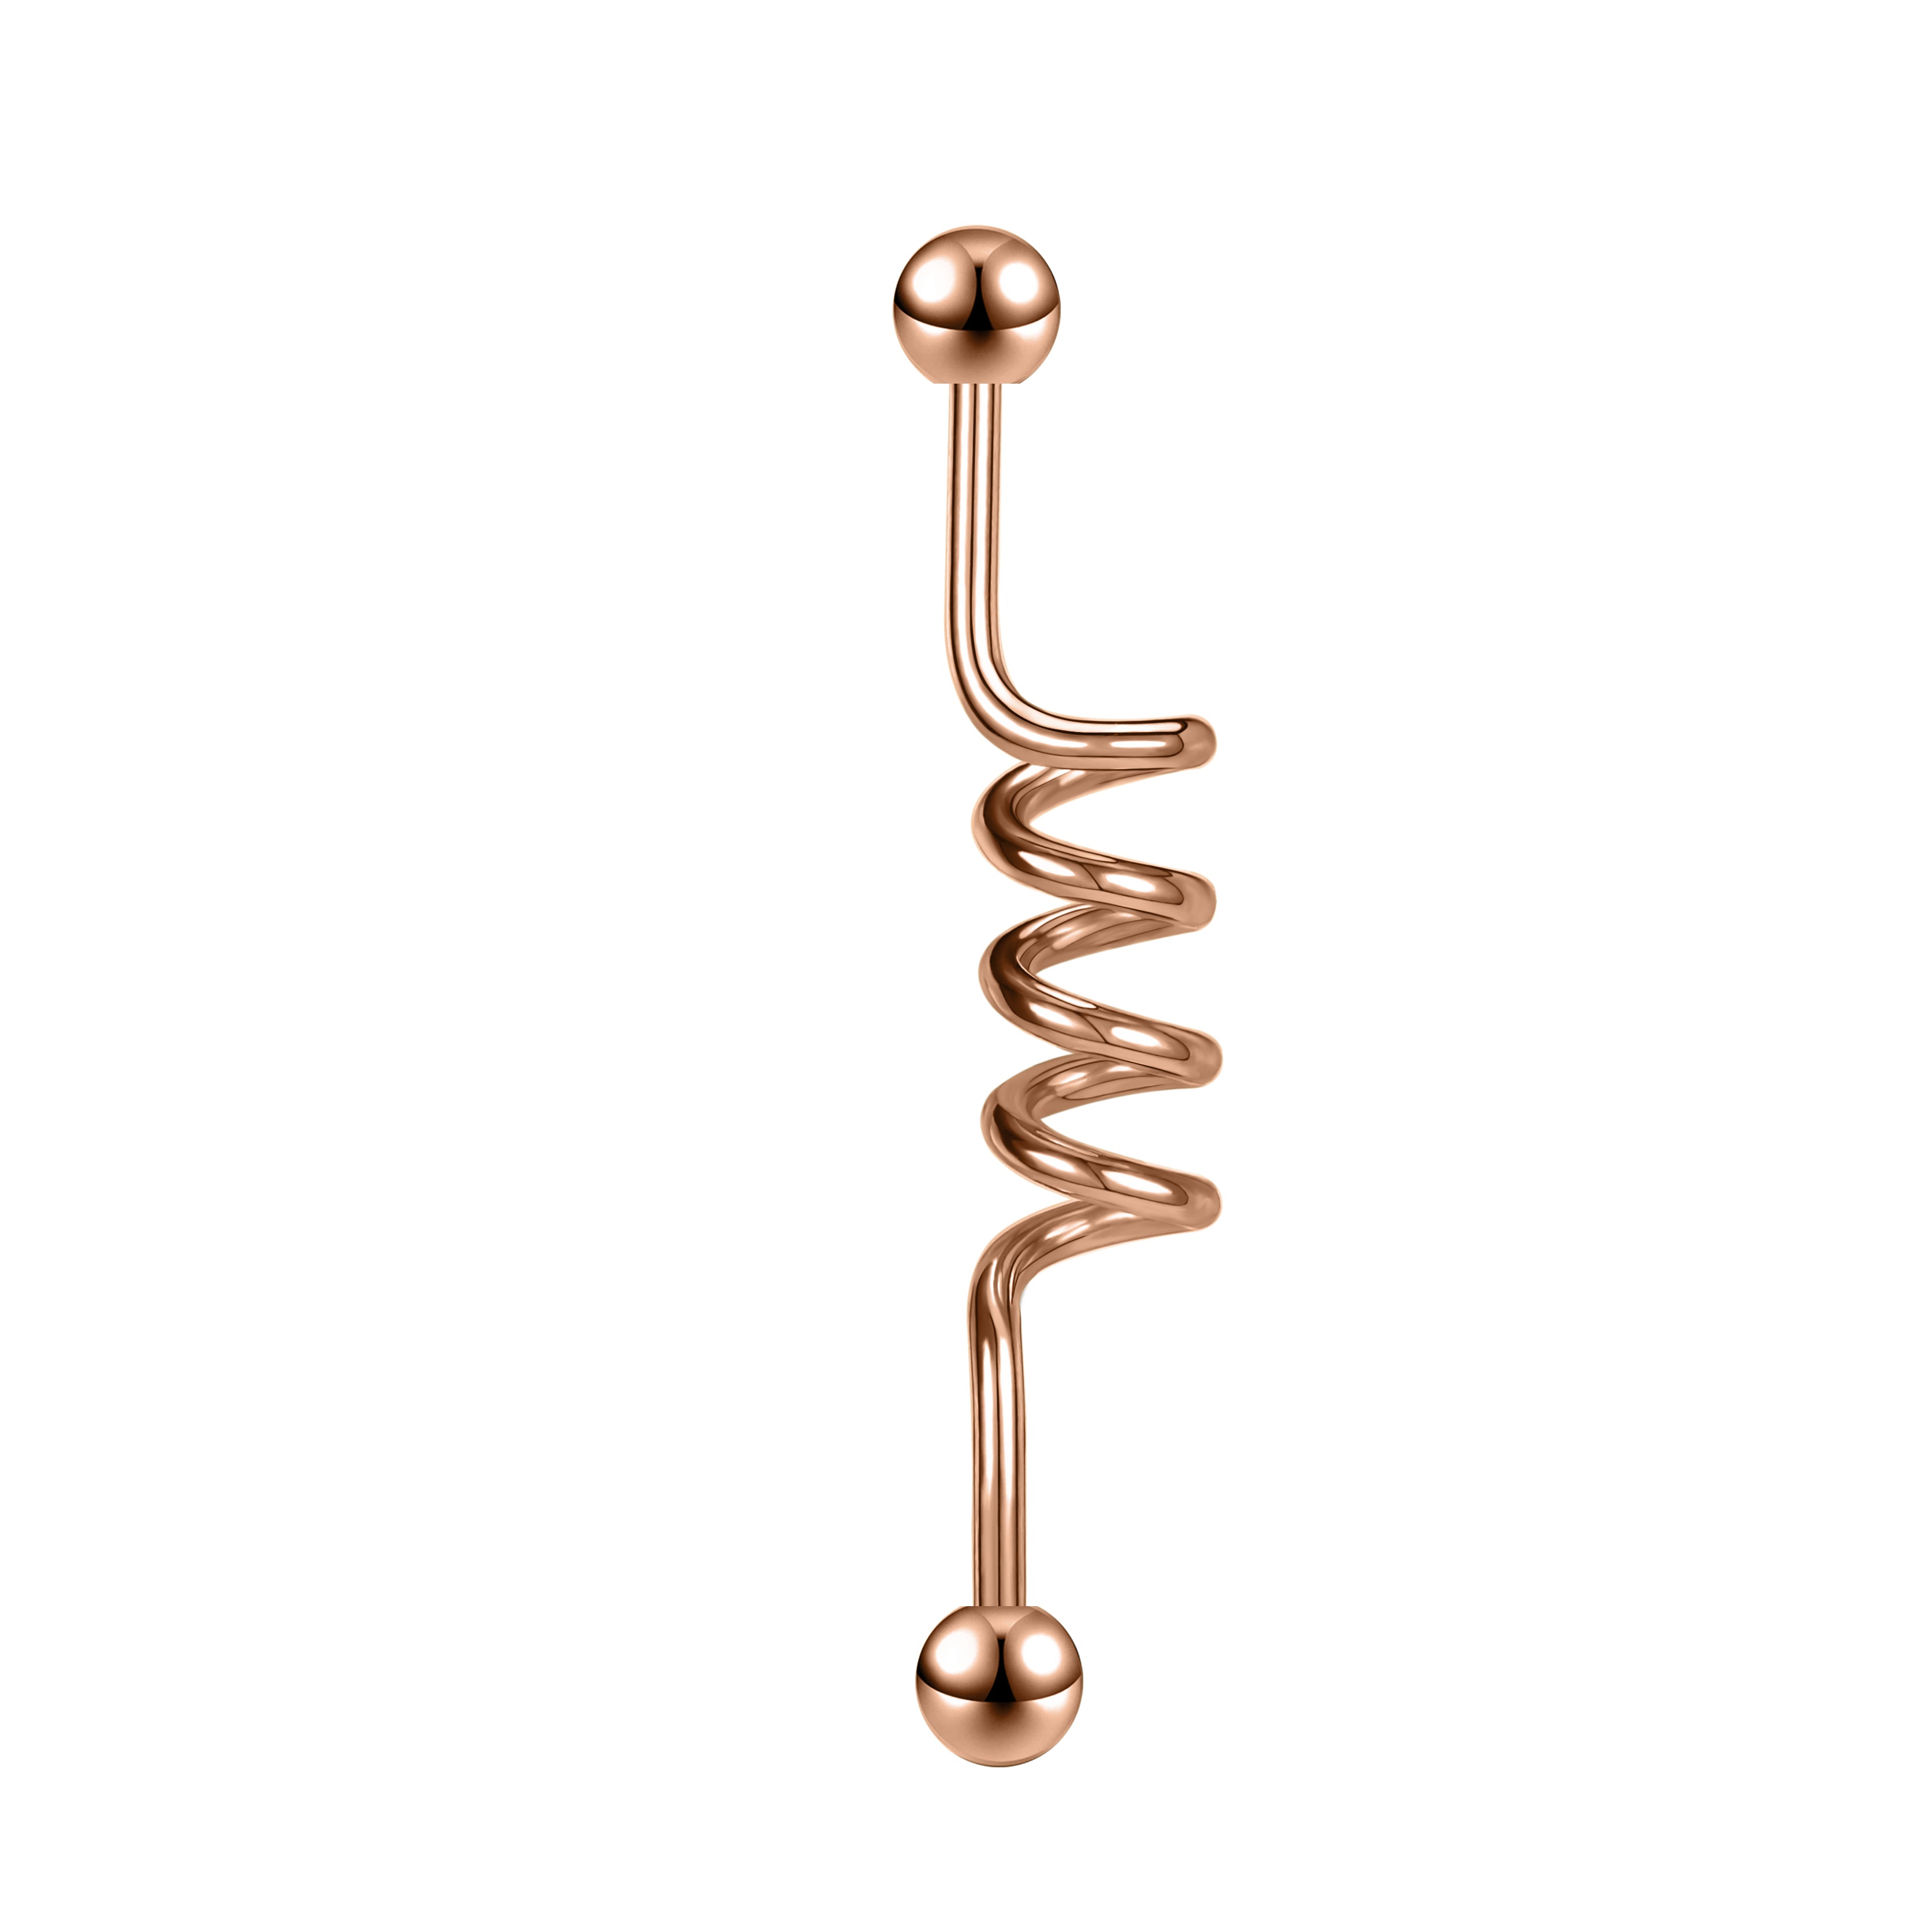 14g-spring-industrial-barbell-earring-ball-ear-helix-piercing